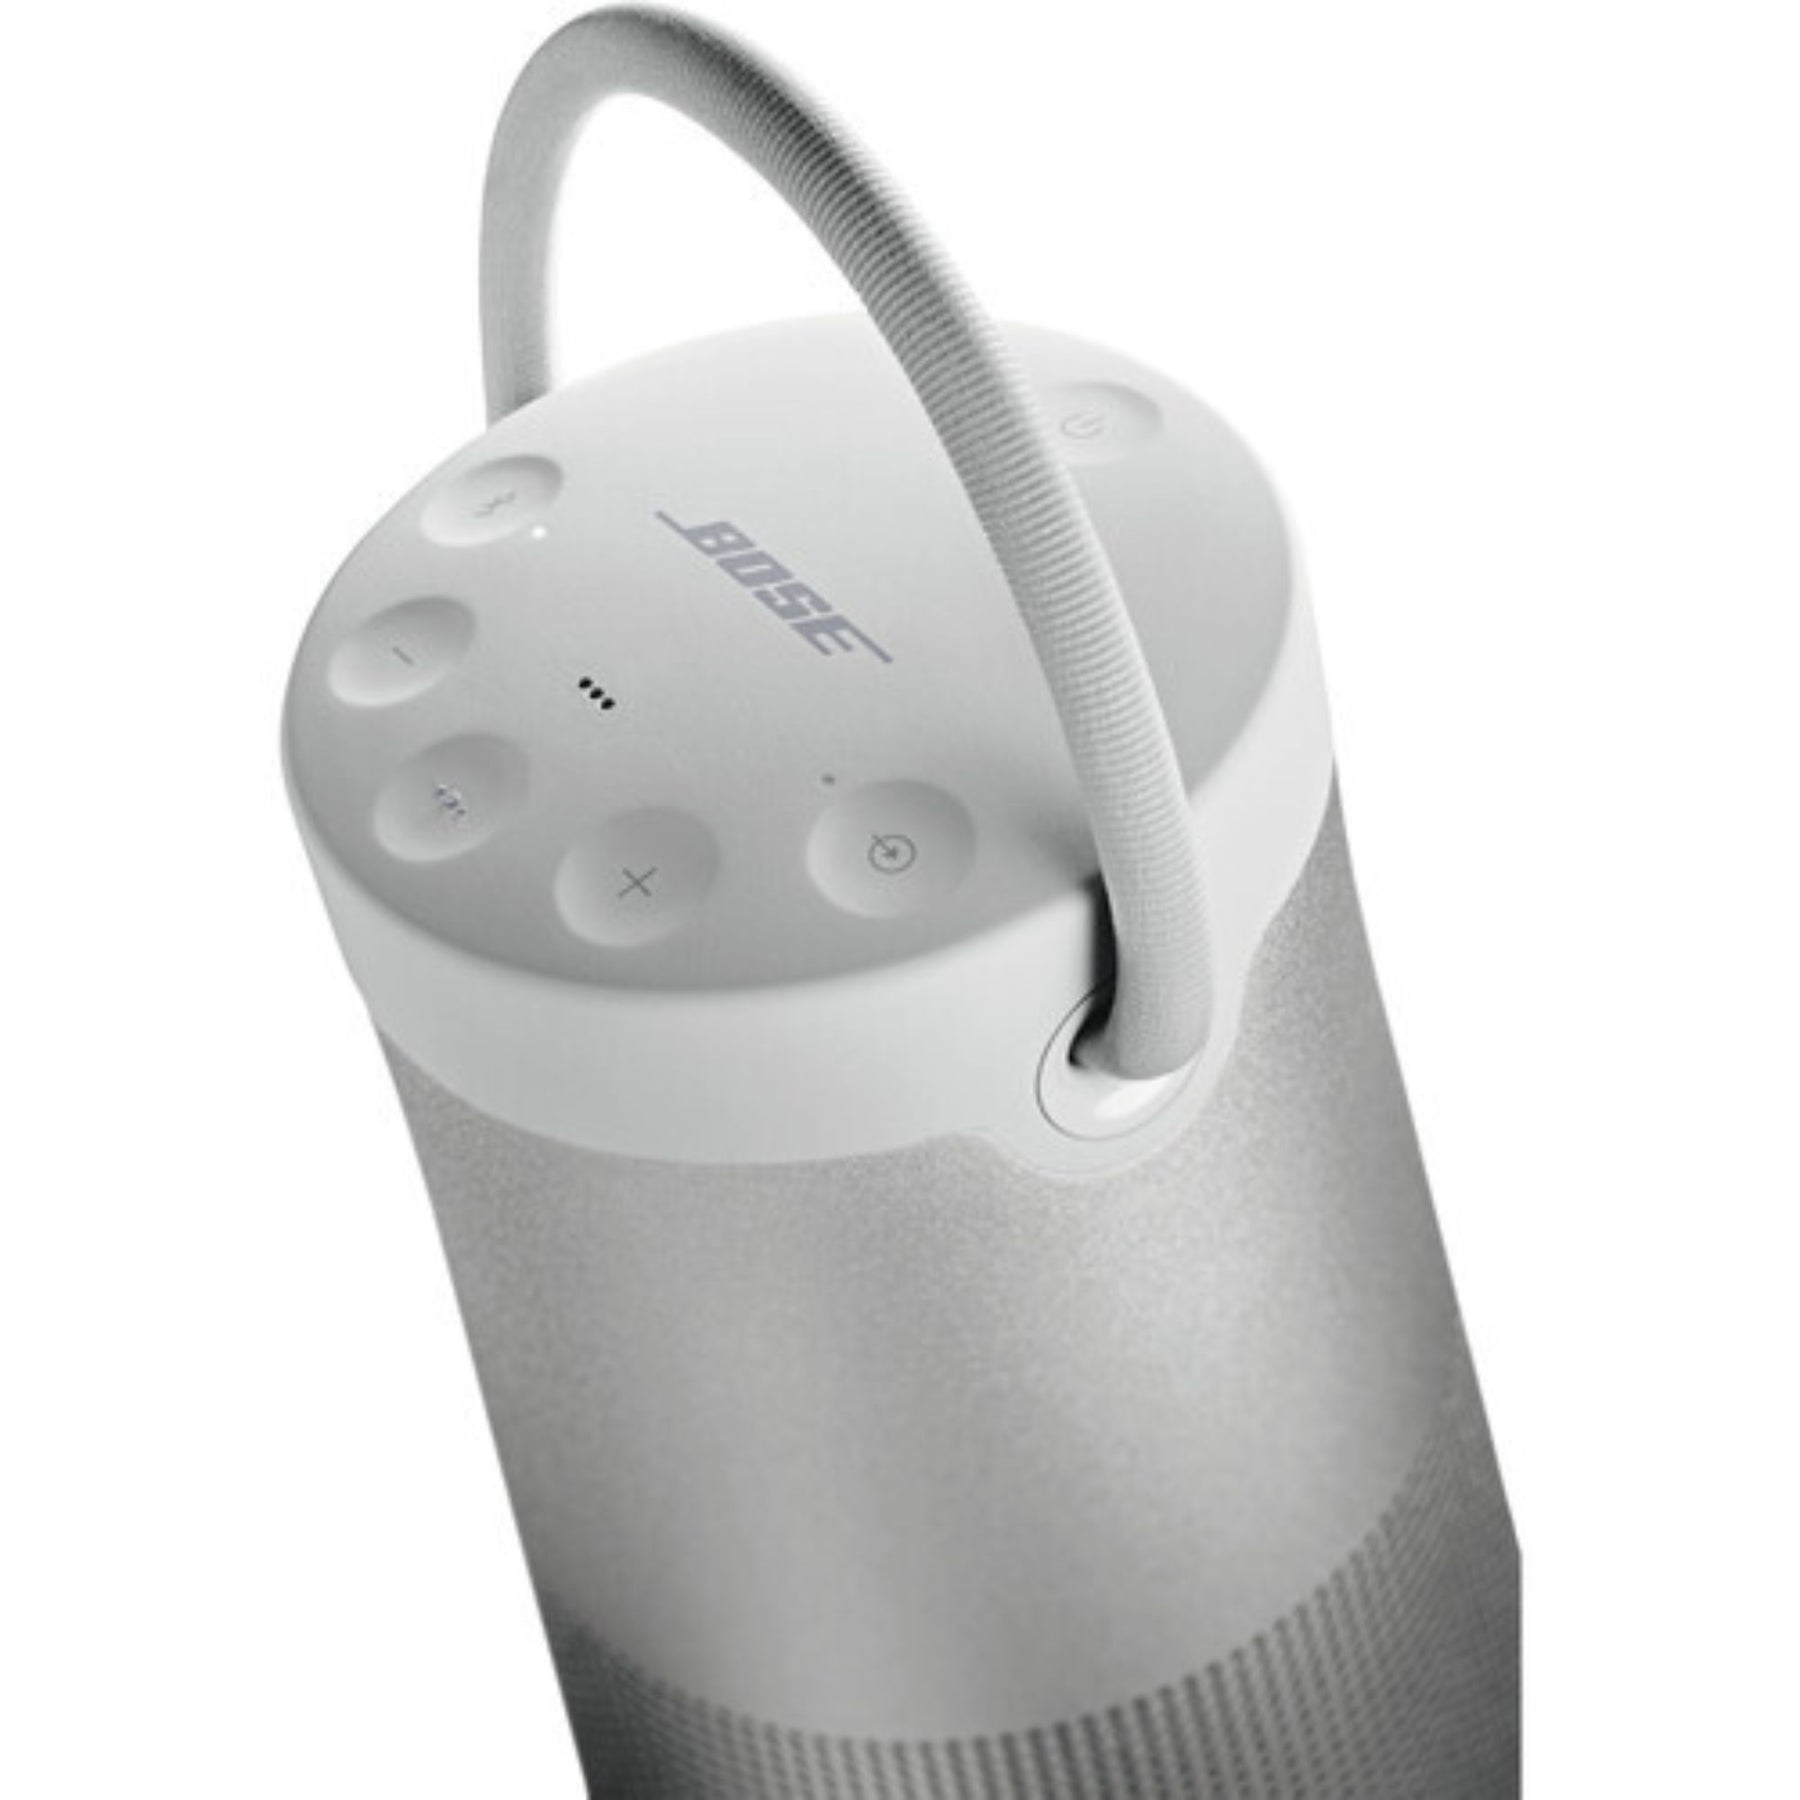  Bose SoundLink Revolve (Series II) Portable Bluetooth